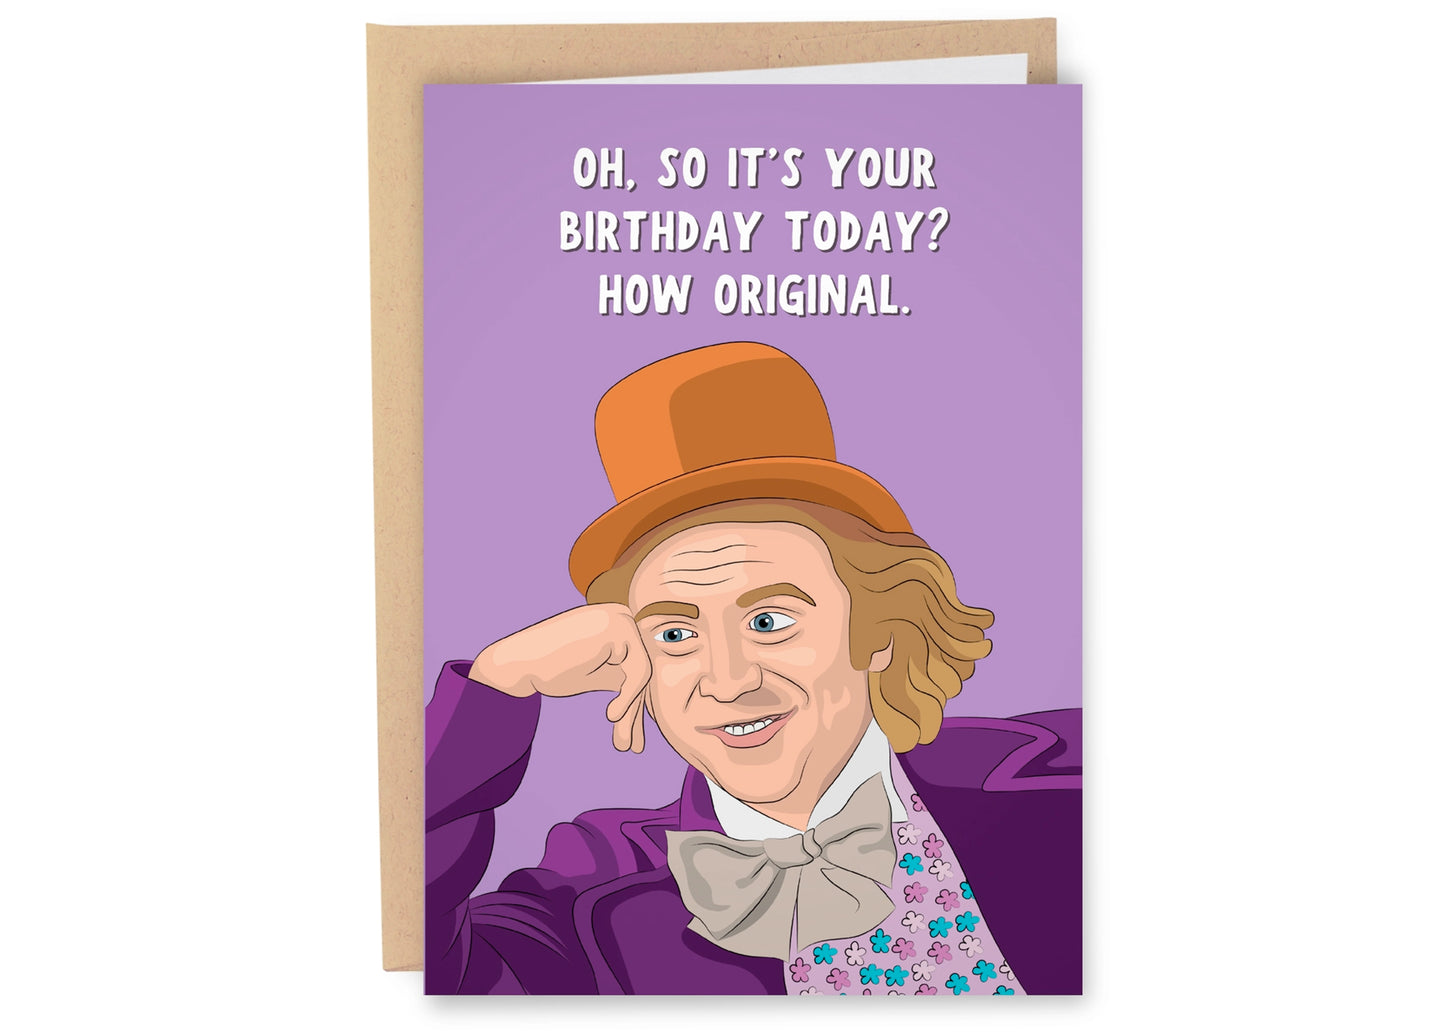 How Original Birthday Card